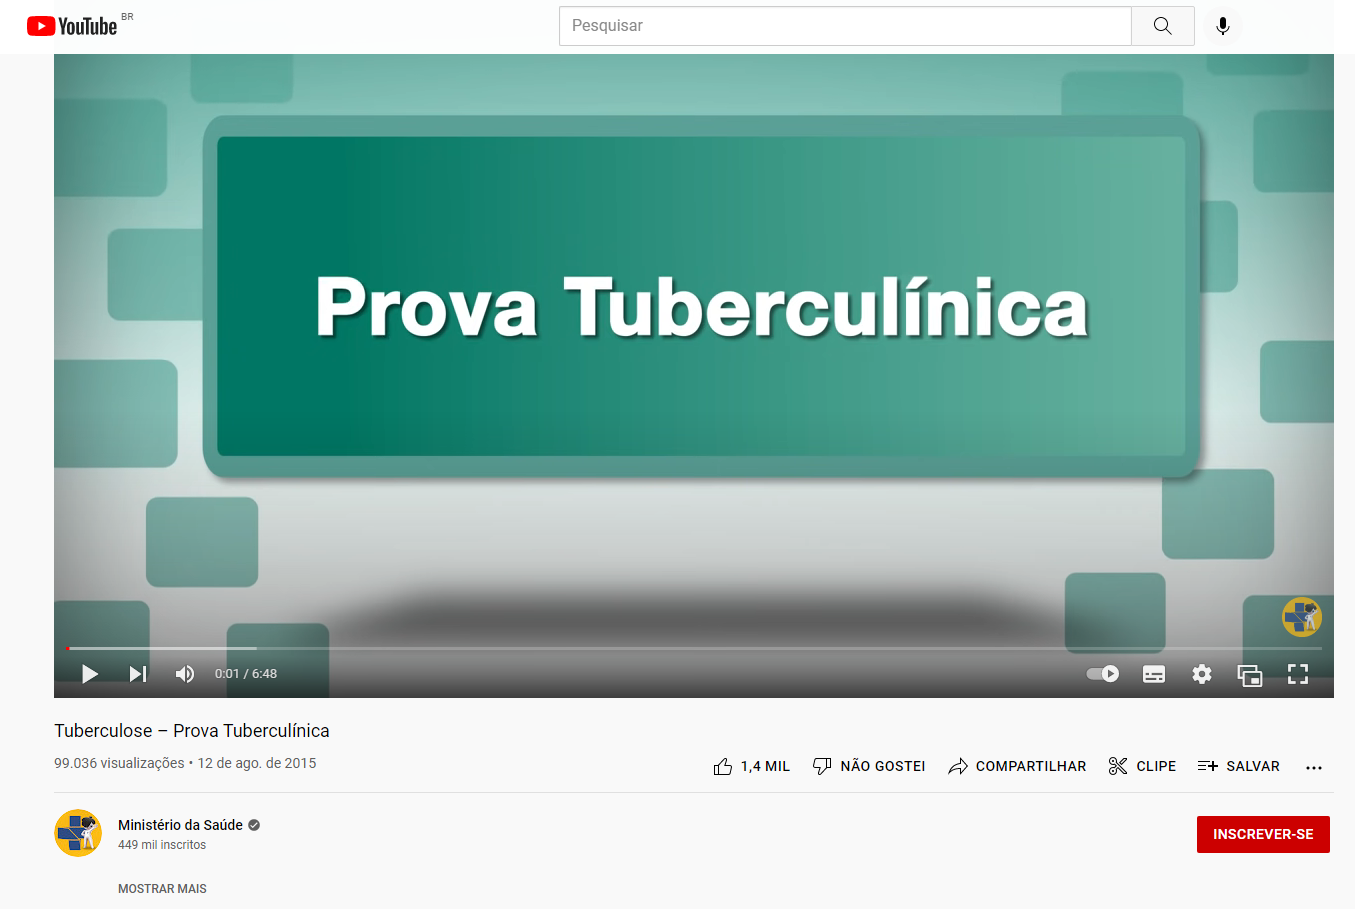 Tuberculose – Prova Tuberculínica (YouTube) 